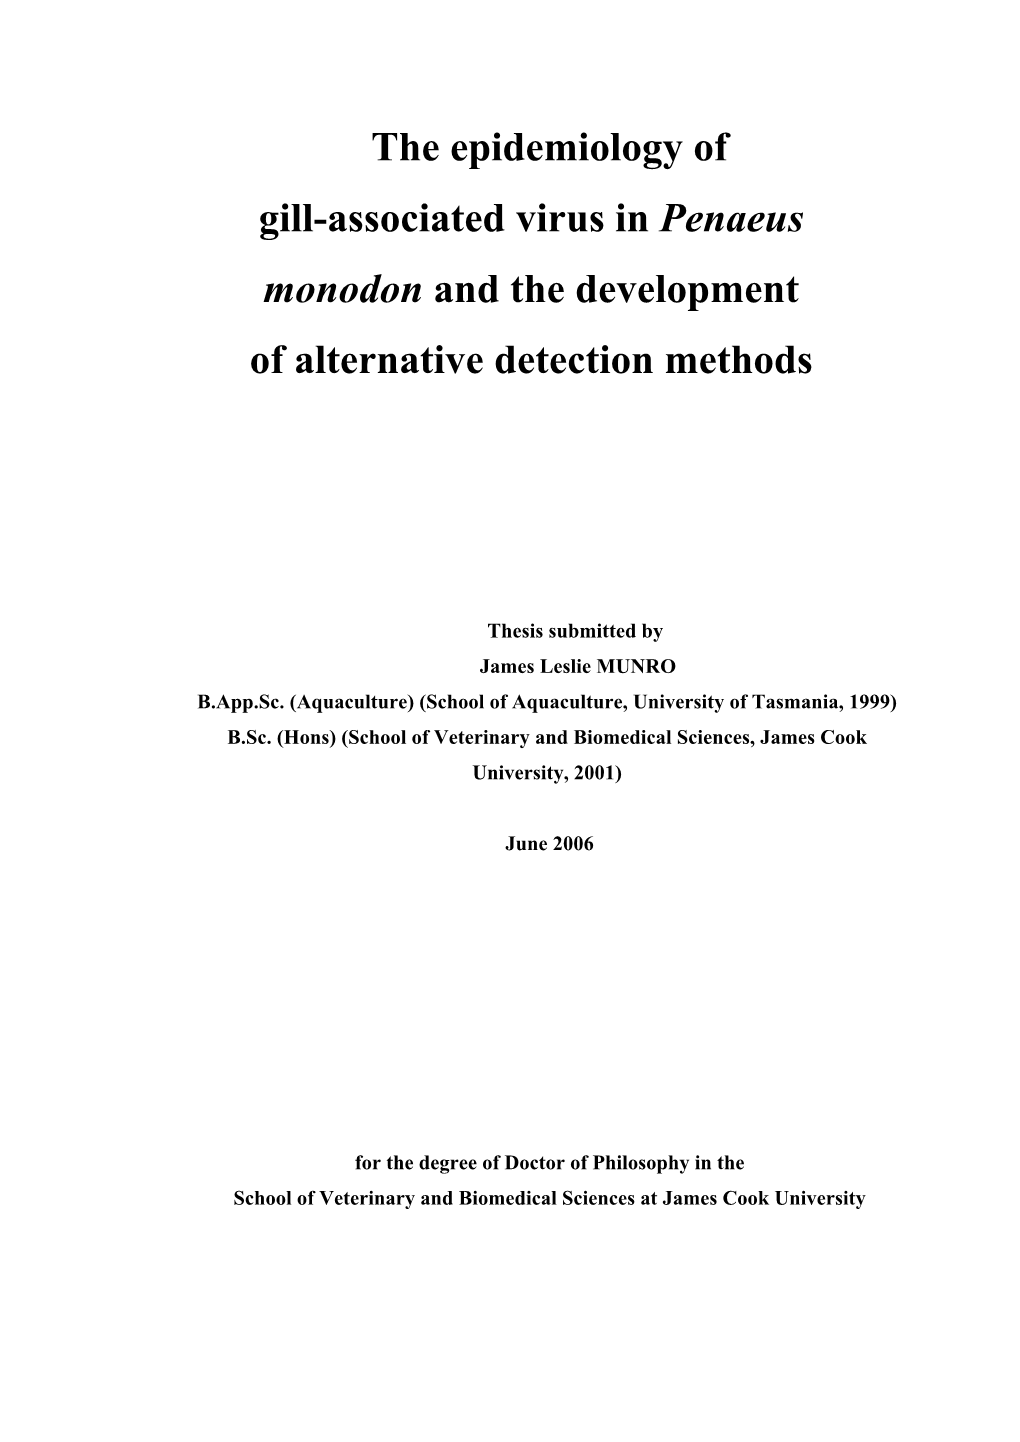 The Epidemiology of Gill-Associated Virus in Penaeus Monodon and the Development of Alternative Detection Methods